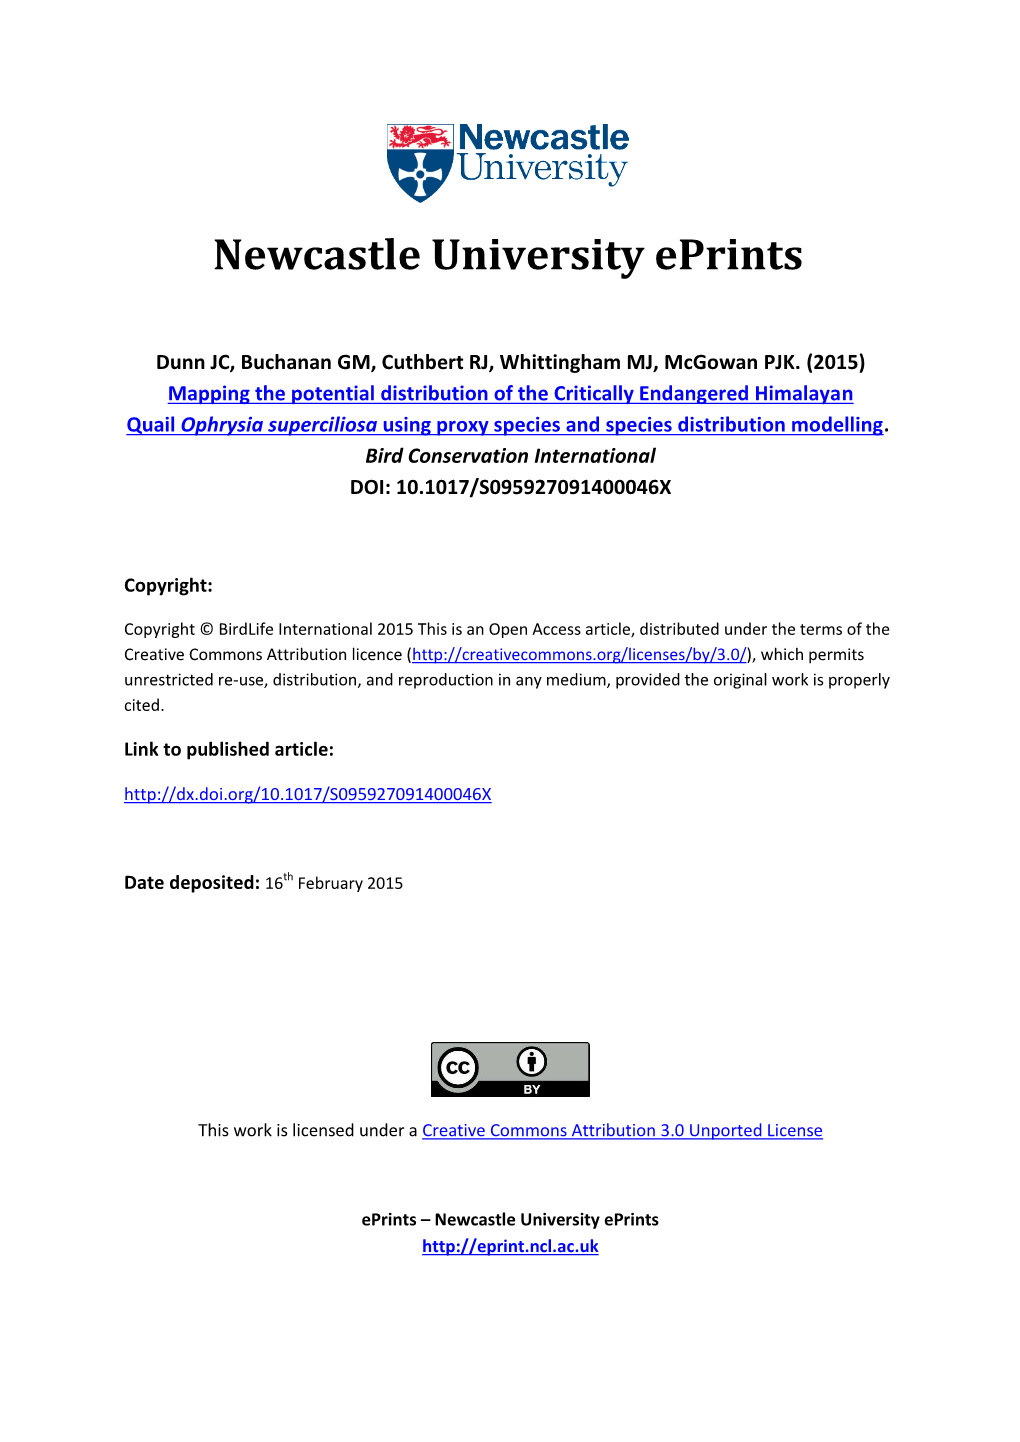 Newcastle University Eprints